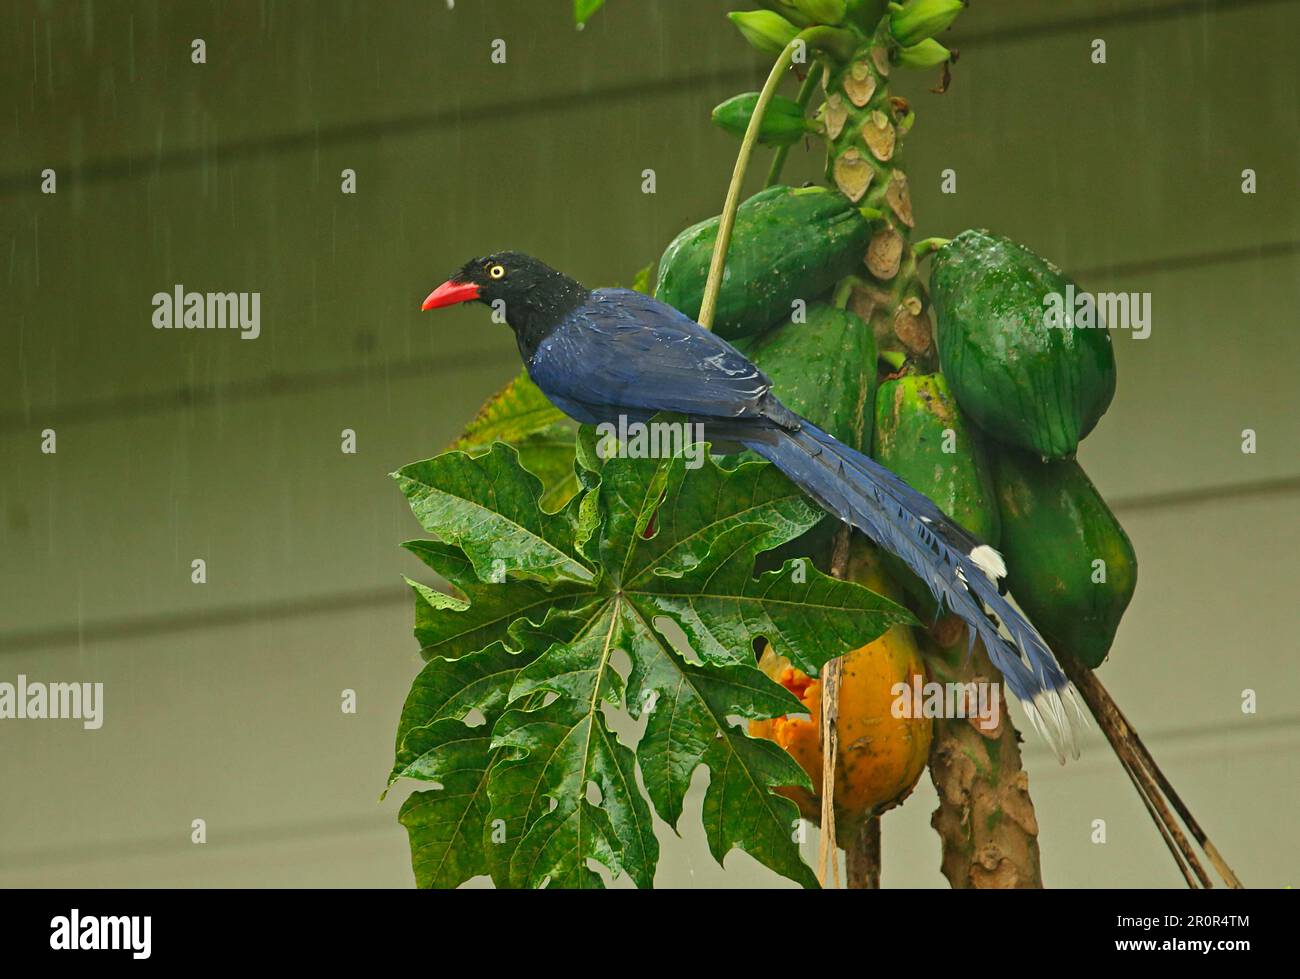 Taiwan taiwan blue magpie (Urocissa caerulea) adult, feeding on papayas (Carica papaya) during the rainy season, Taiwan Stock Photo